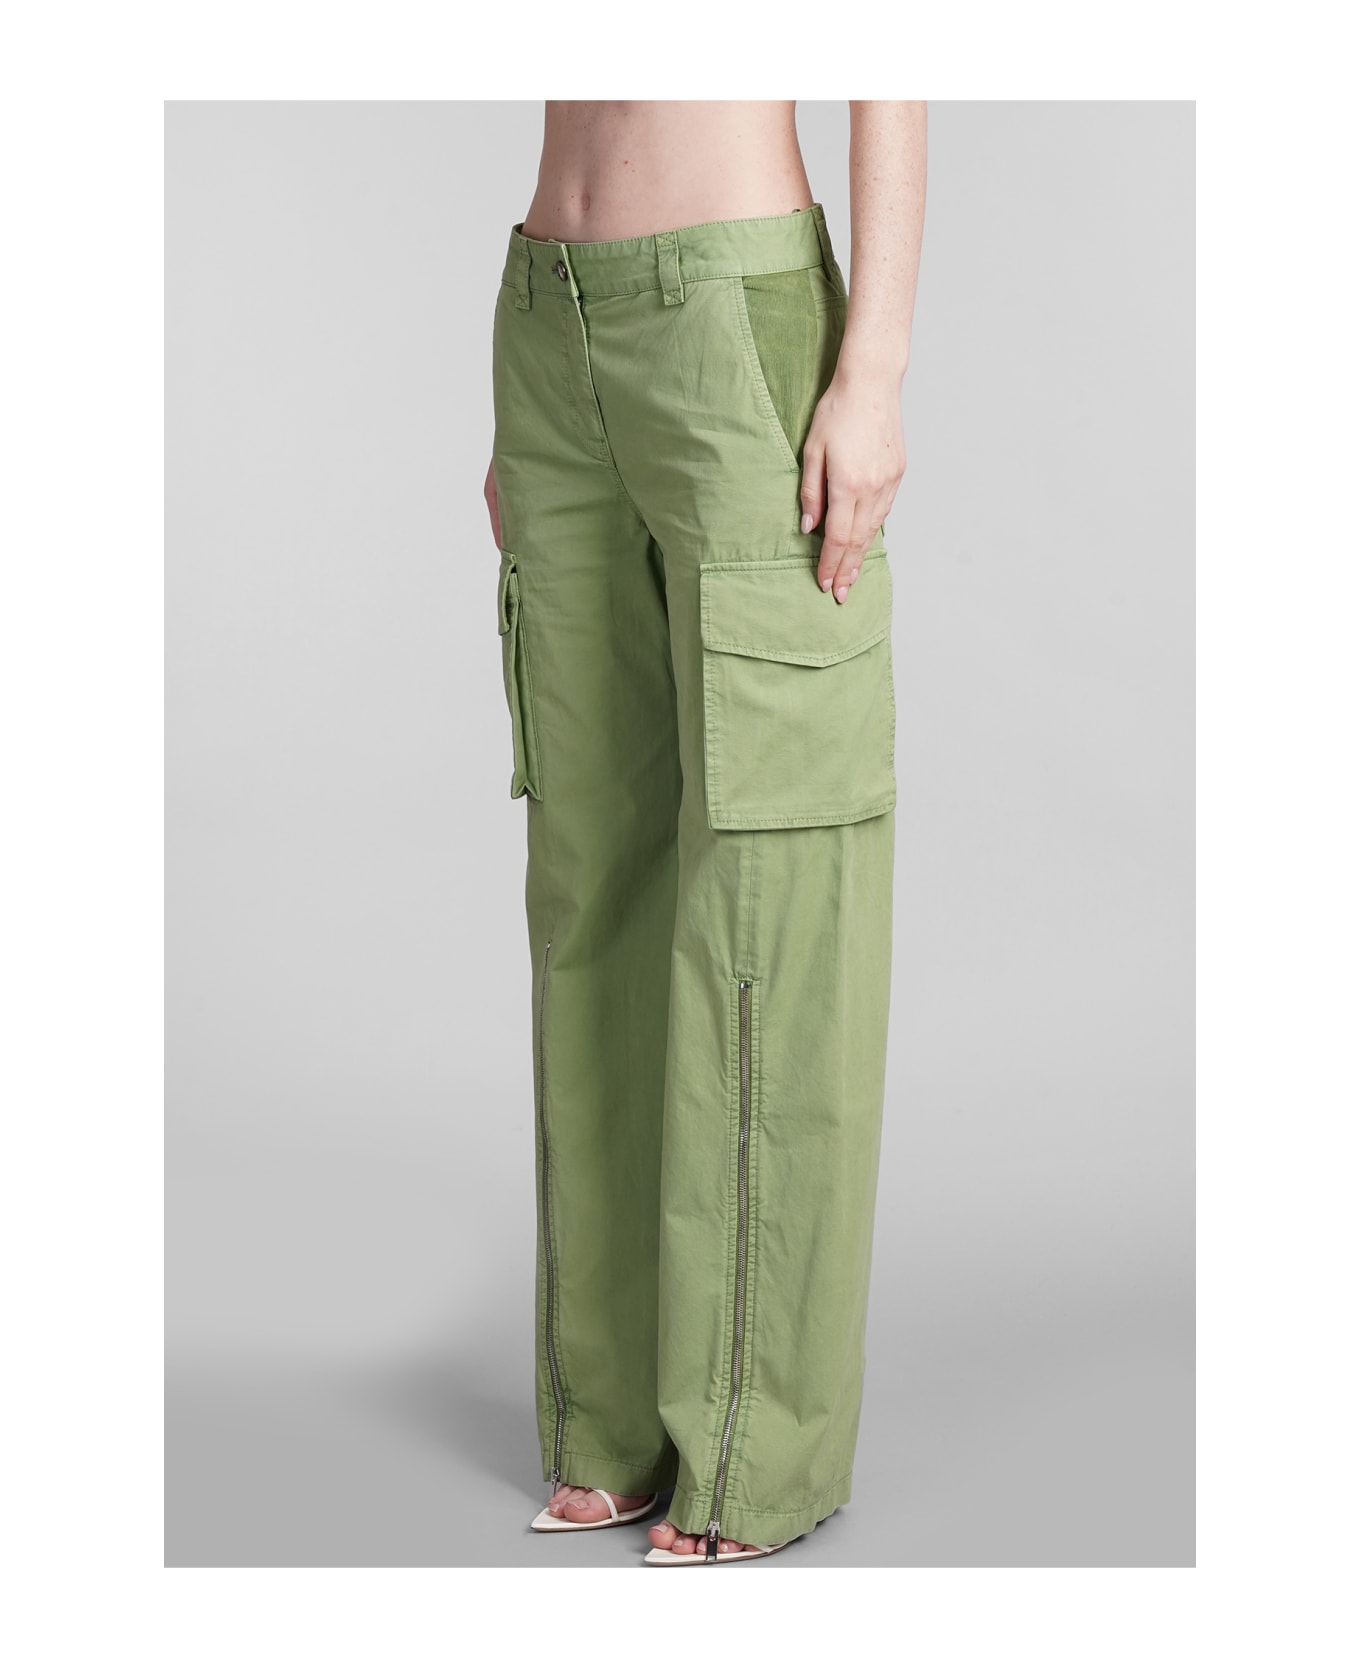 Stella McCartney Pants In Green Cotton - green